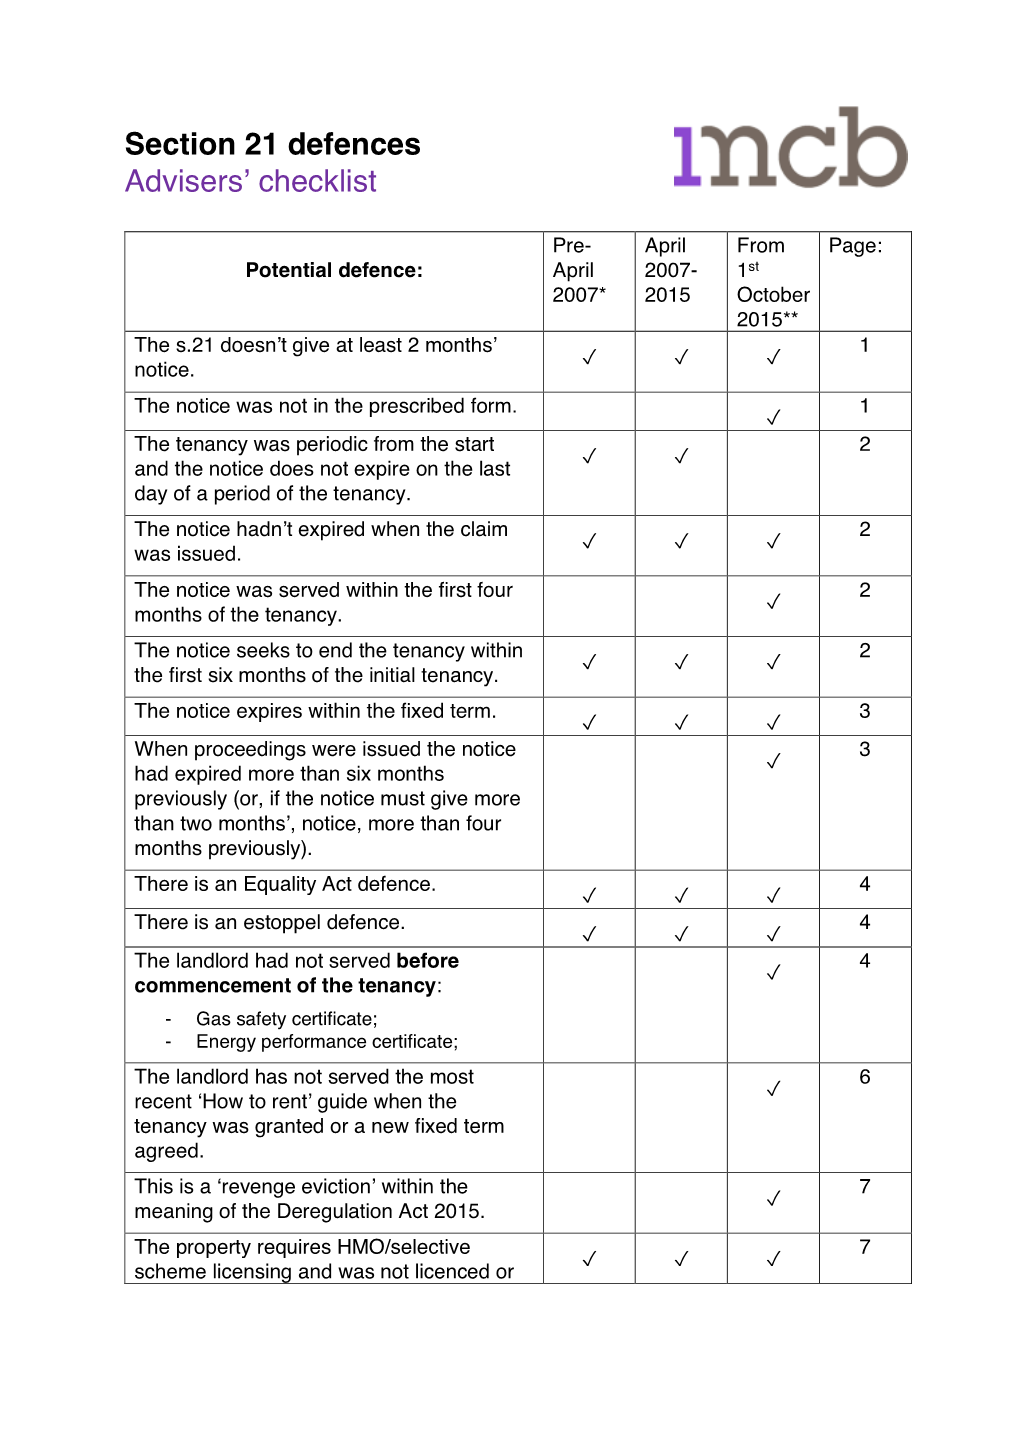 Section 21 Defences Advisers' Checklist